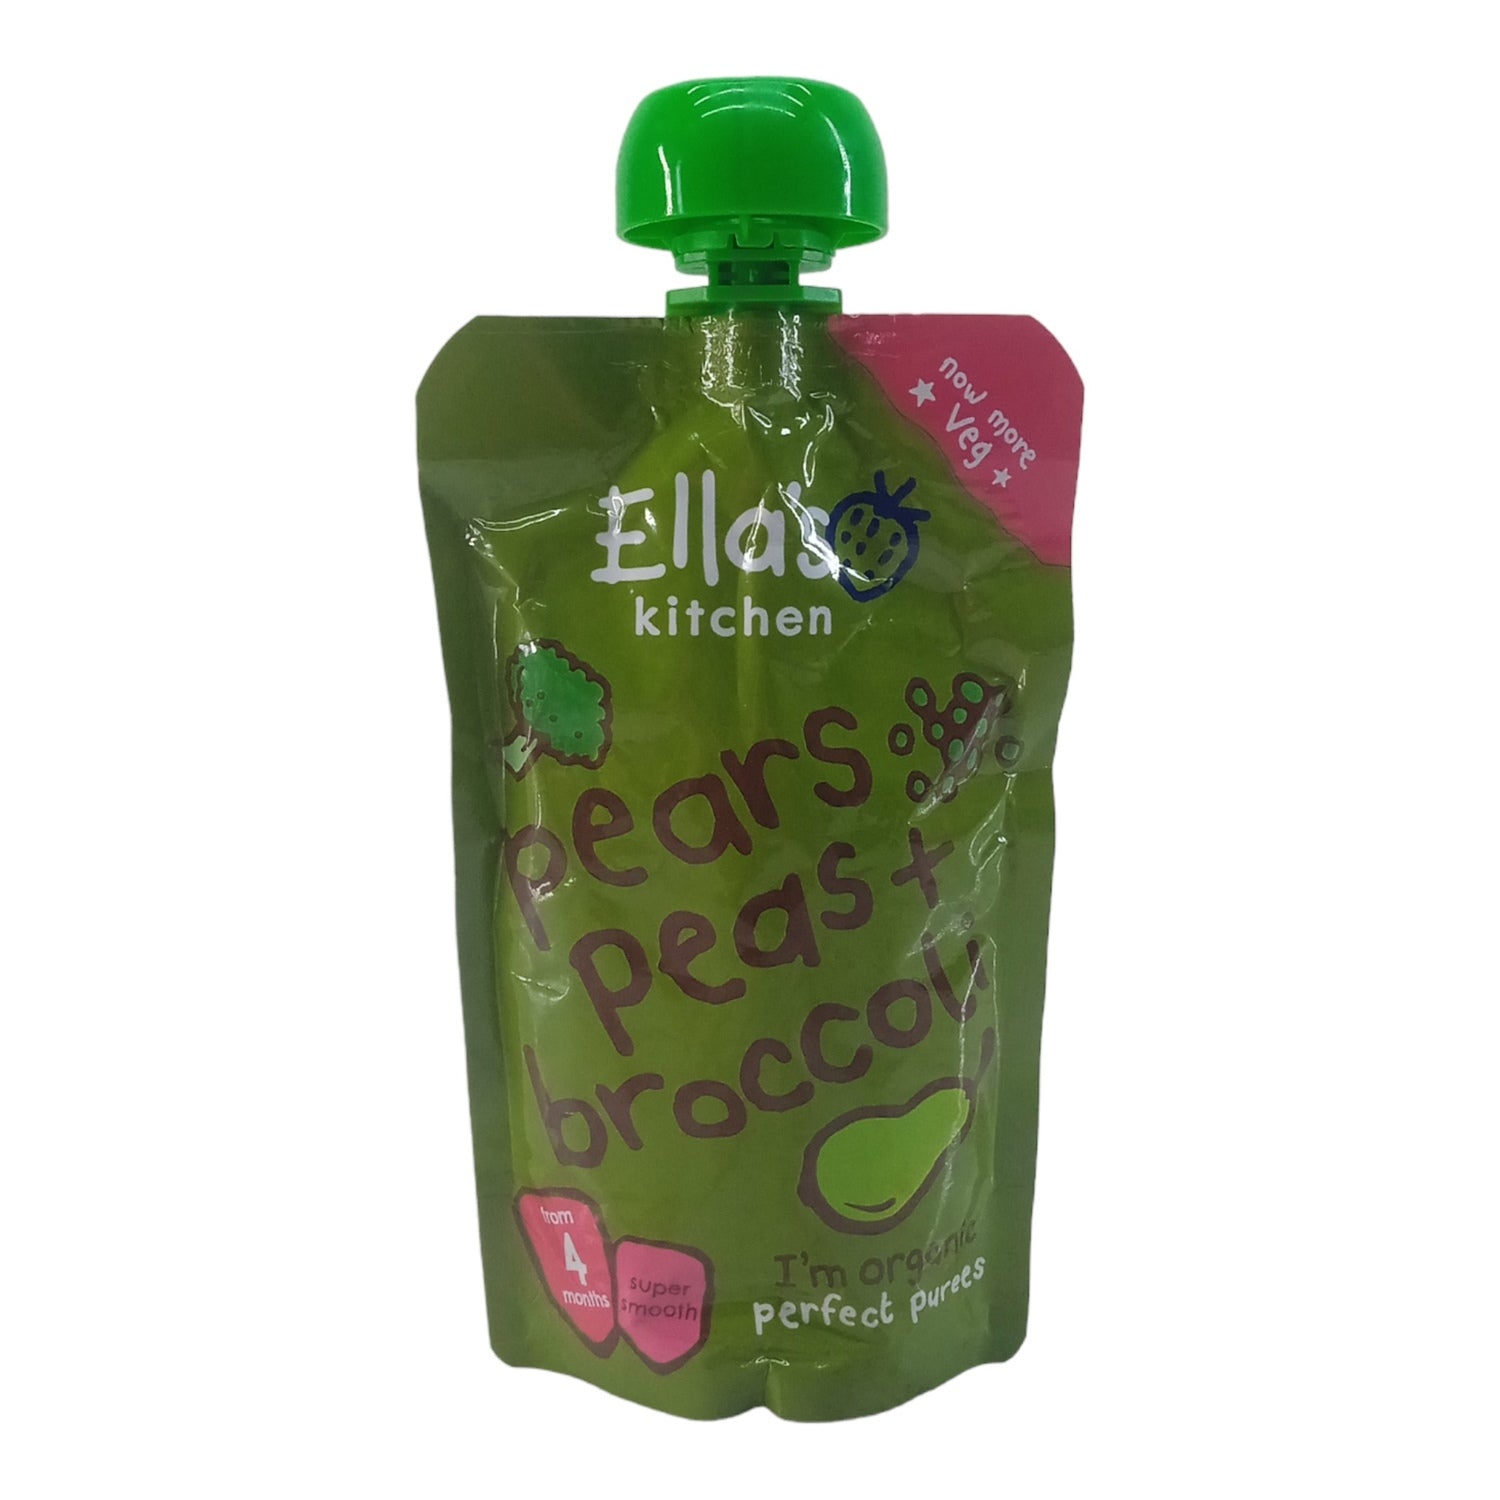 Ellas Kitchen Pears, Peas + Broccoli - 120g